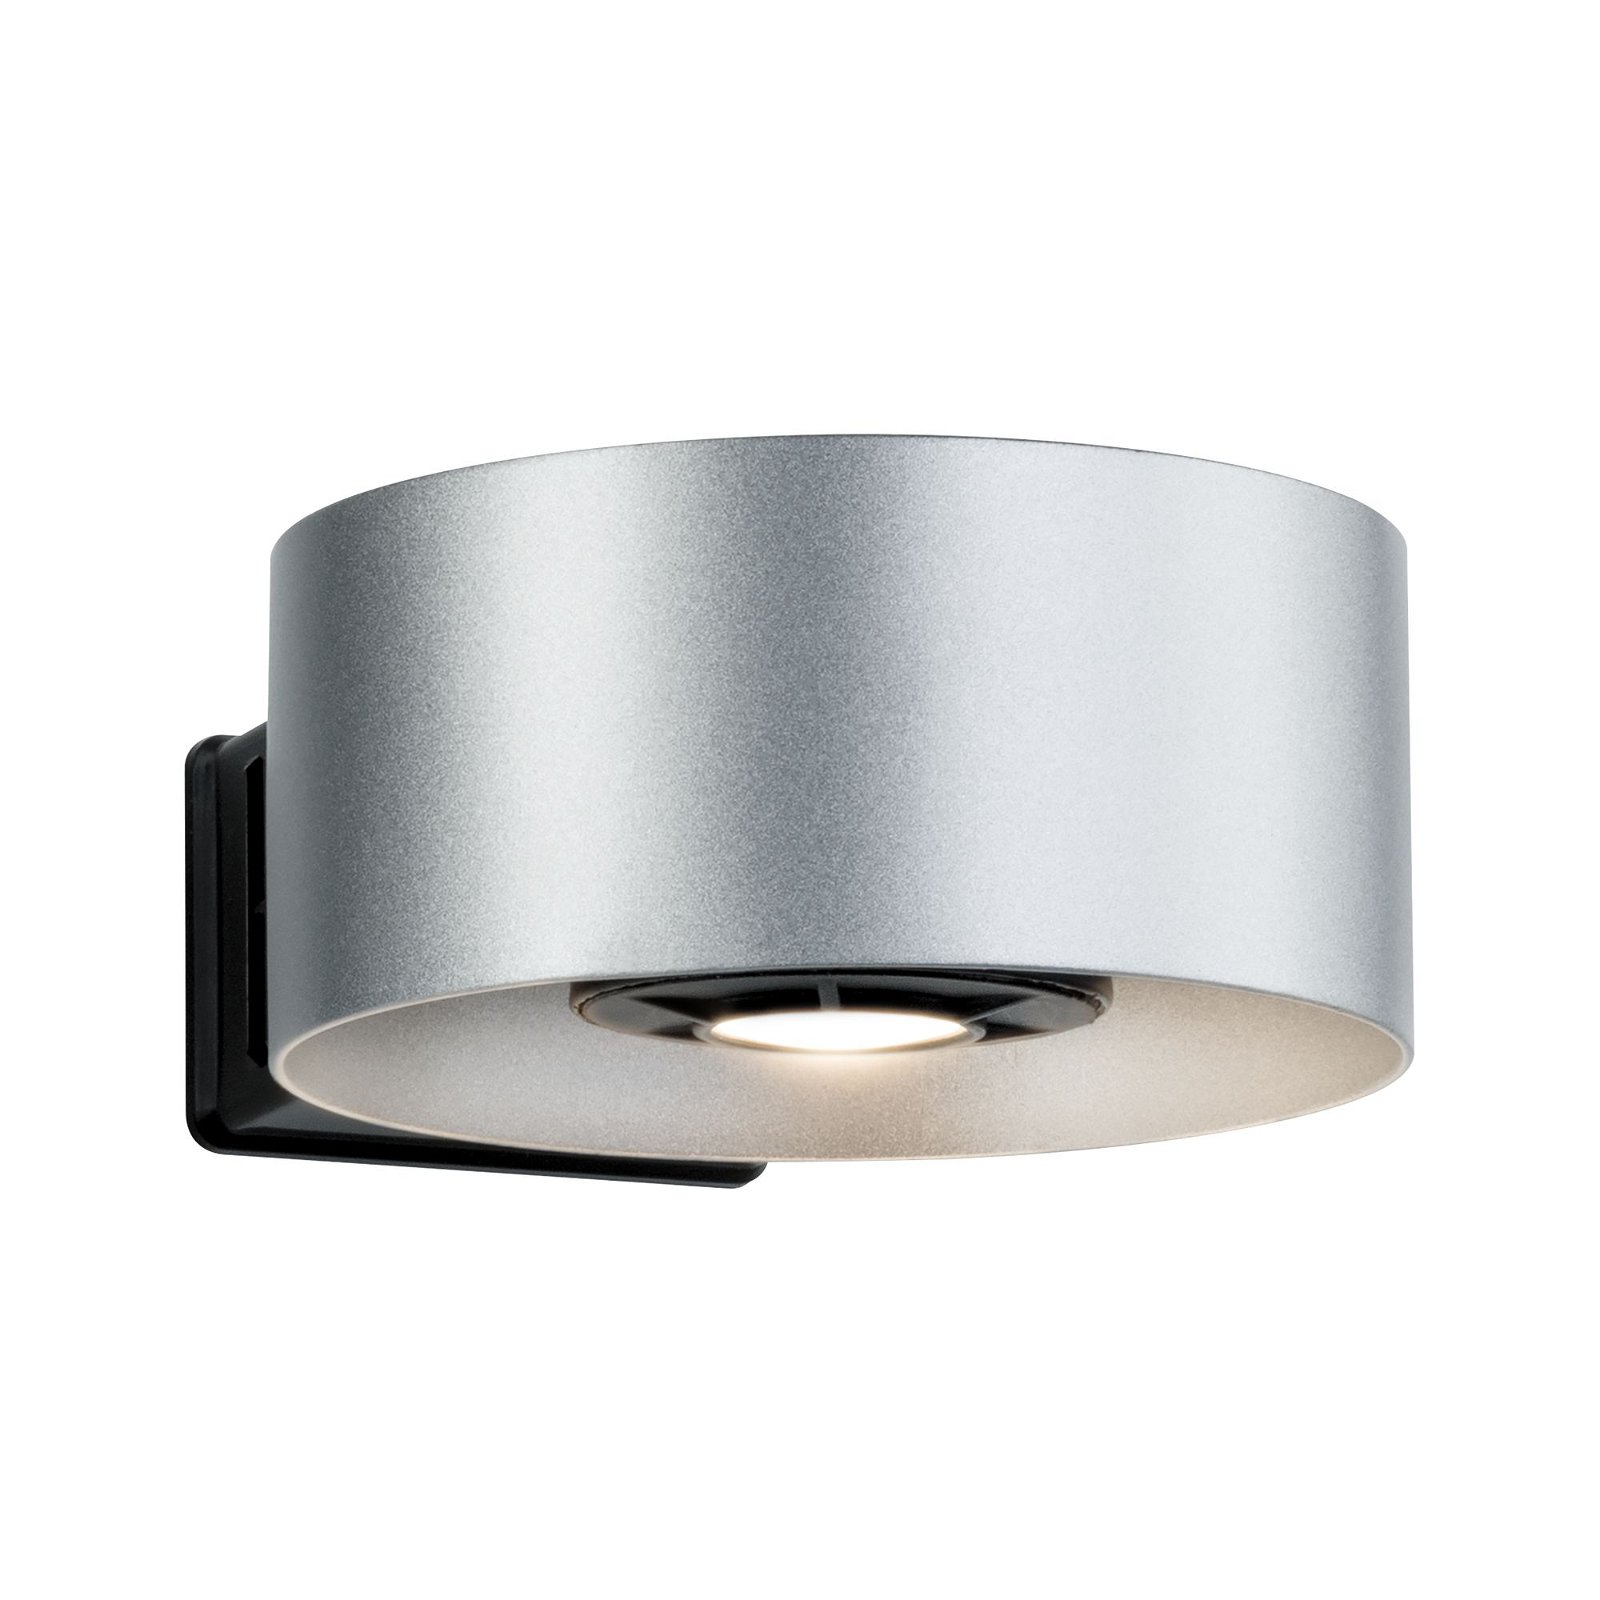 House wandlamp Cone IP44 3000K 2x6W zilver/ antraciet